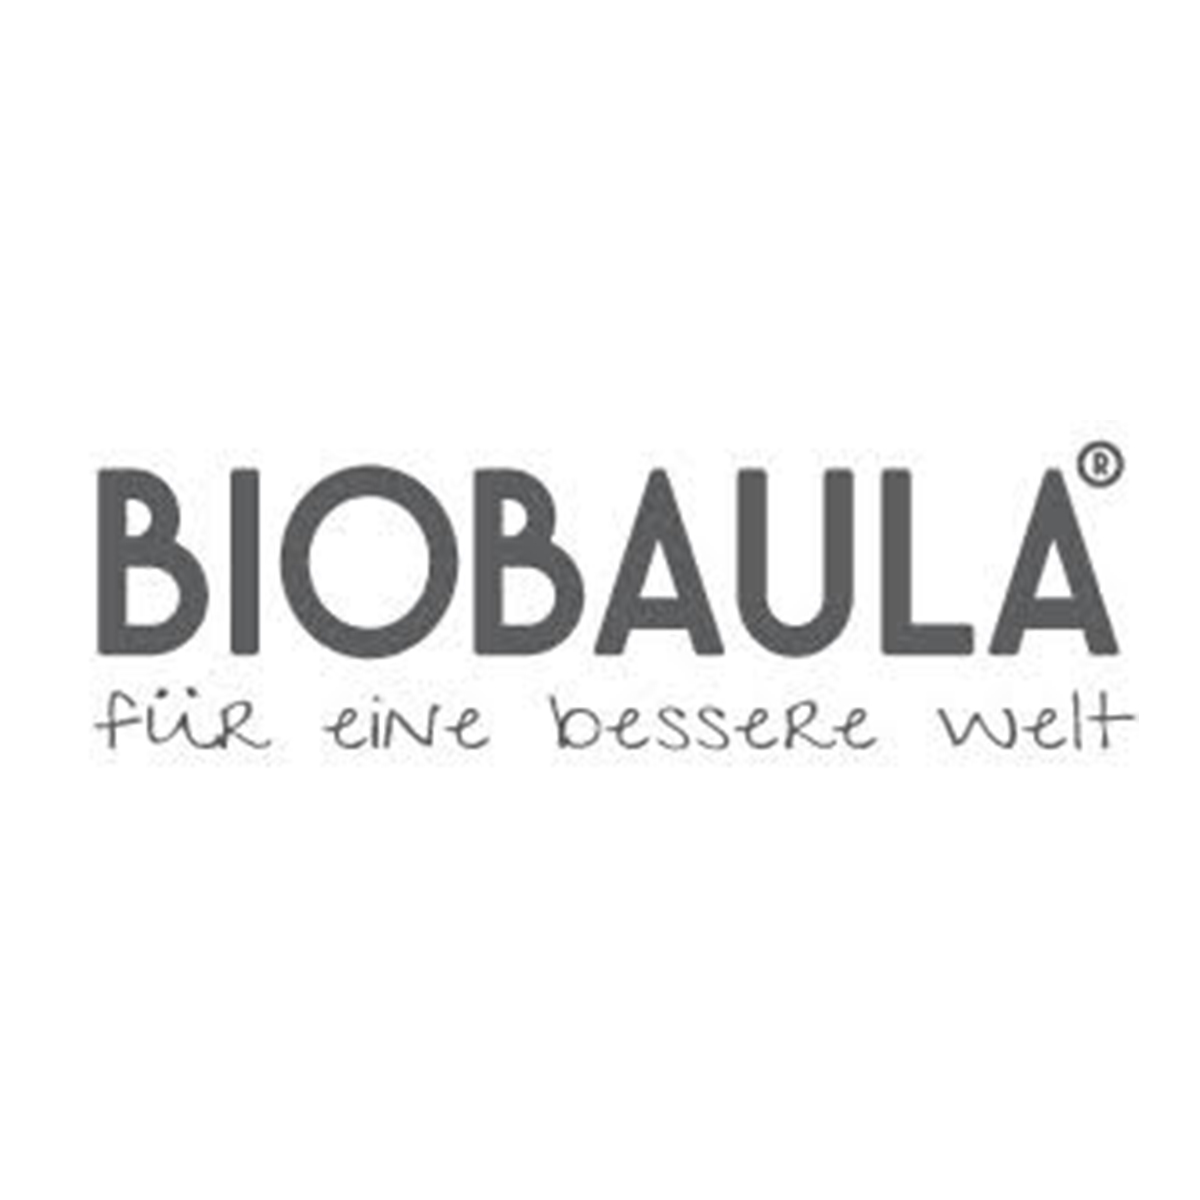 Biobaula